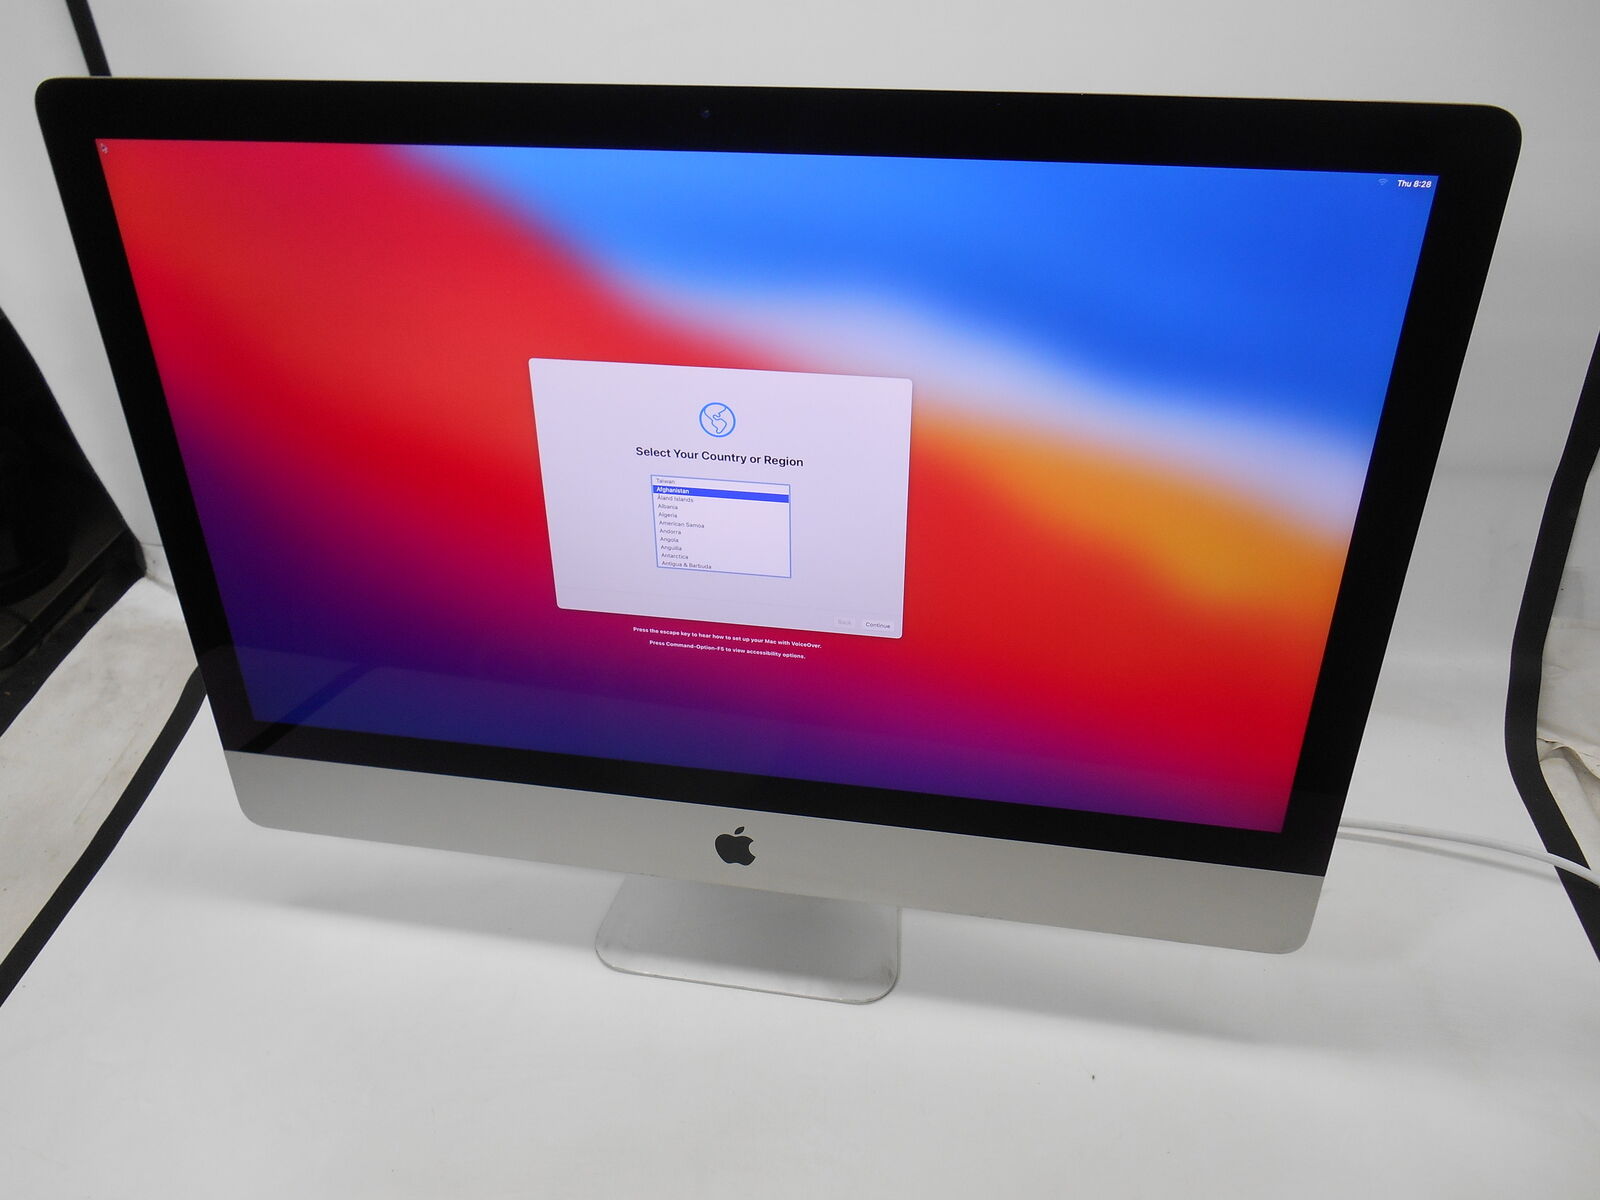 Apple iMac16,2 21.5